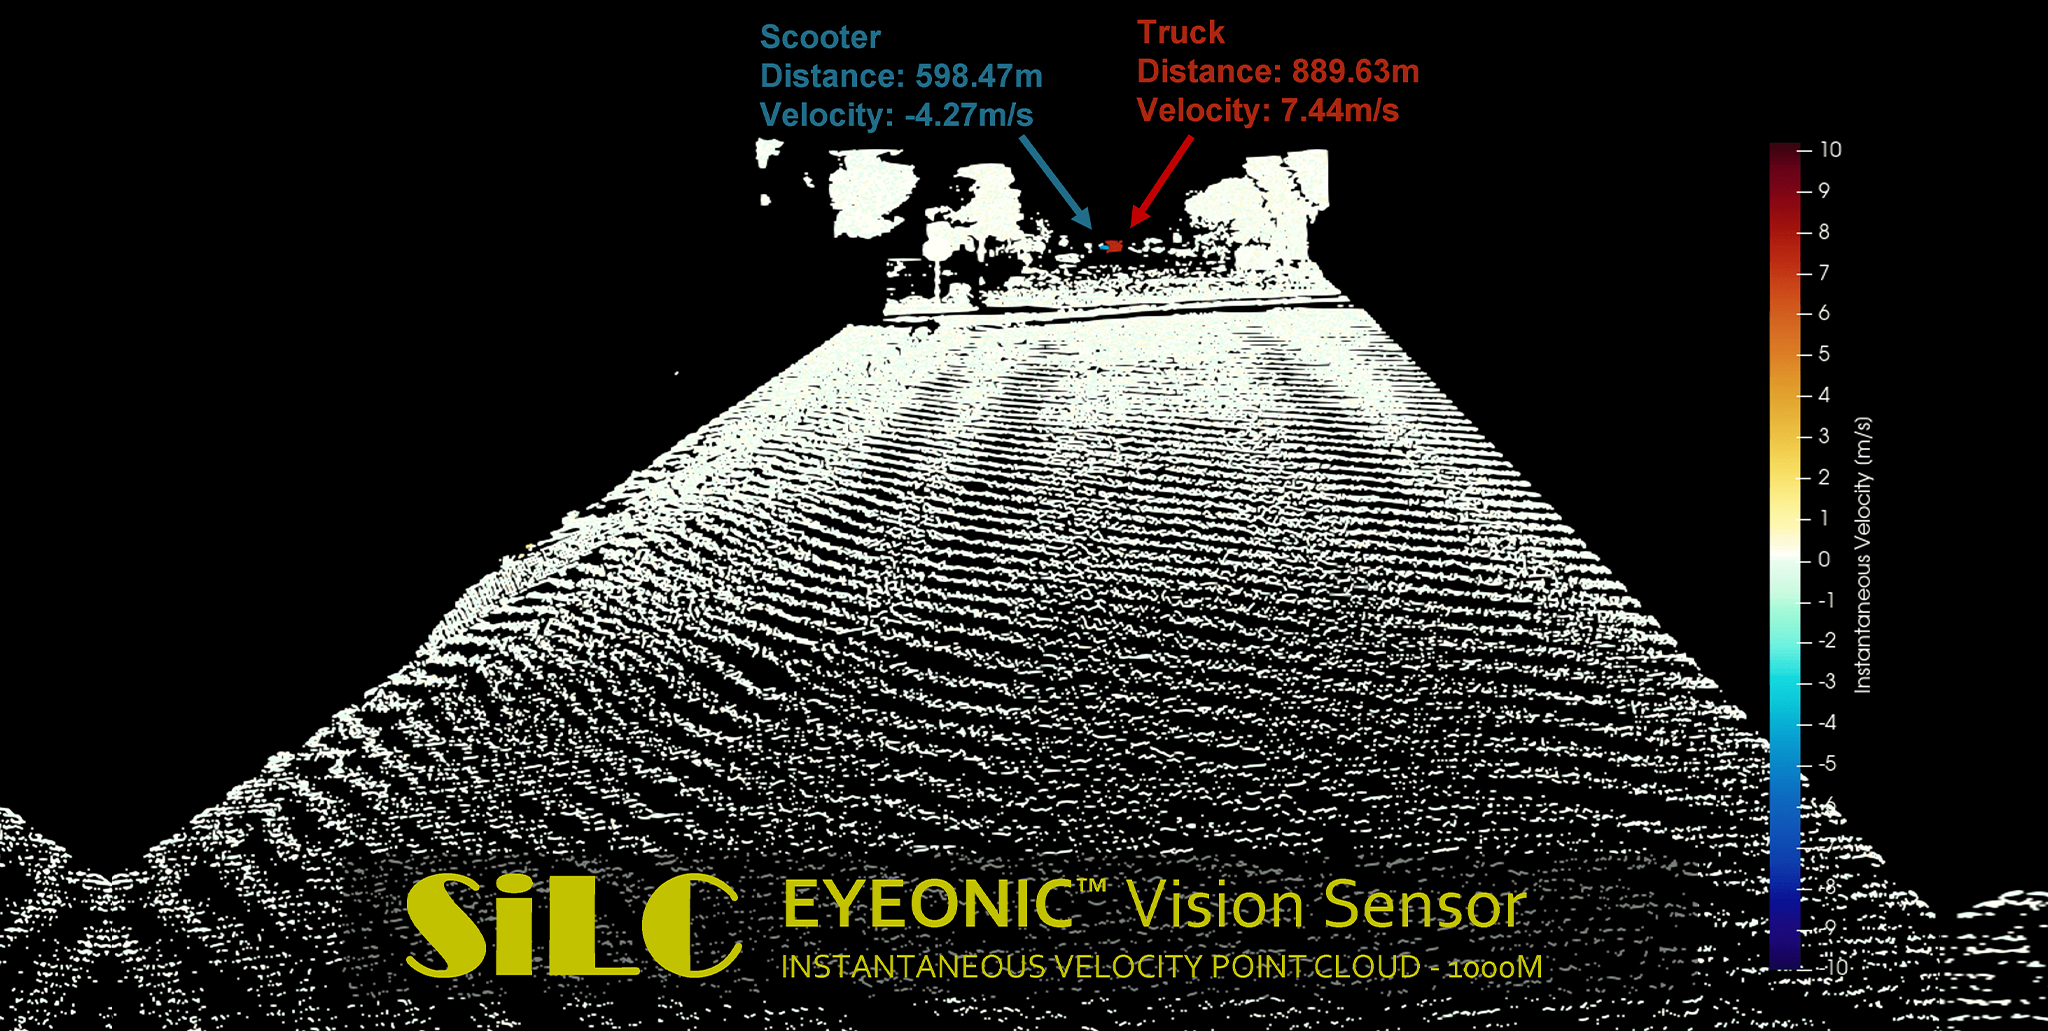 graphic showing detection range of Eyeonic vision sensor